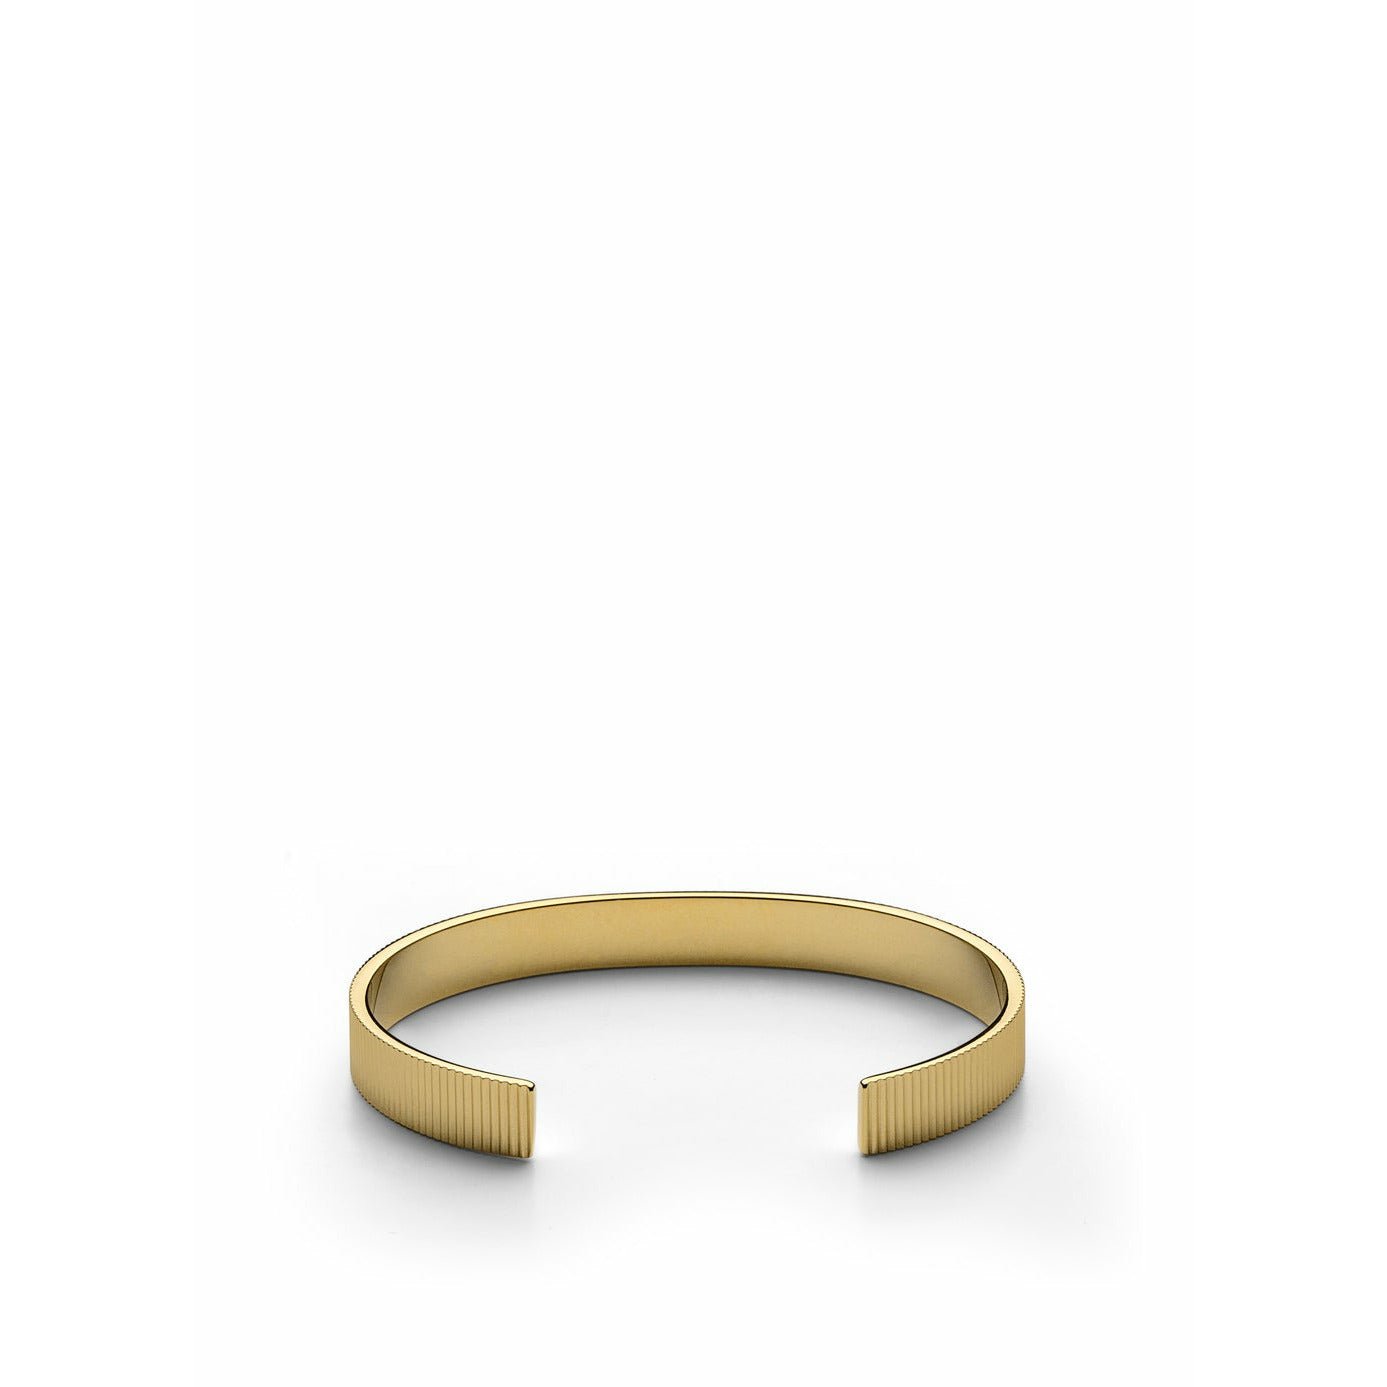 Skultuna geripptes Armband kleines Gold plattiert, Ø14,5 cm